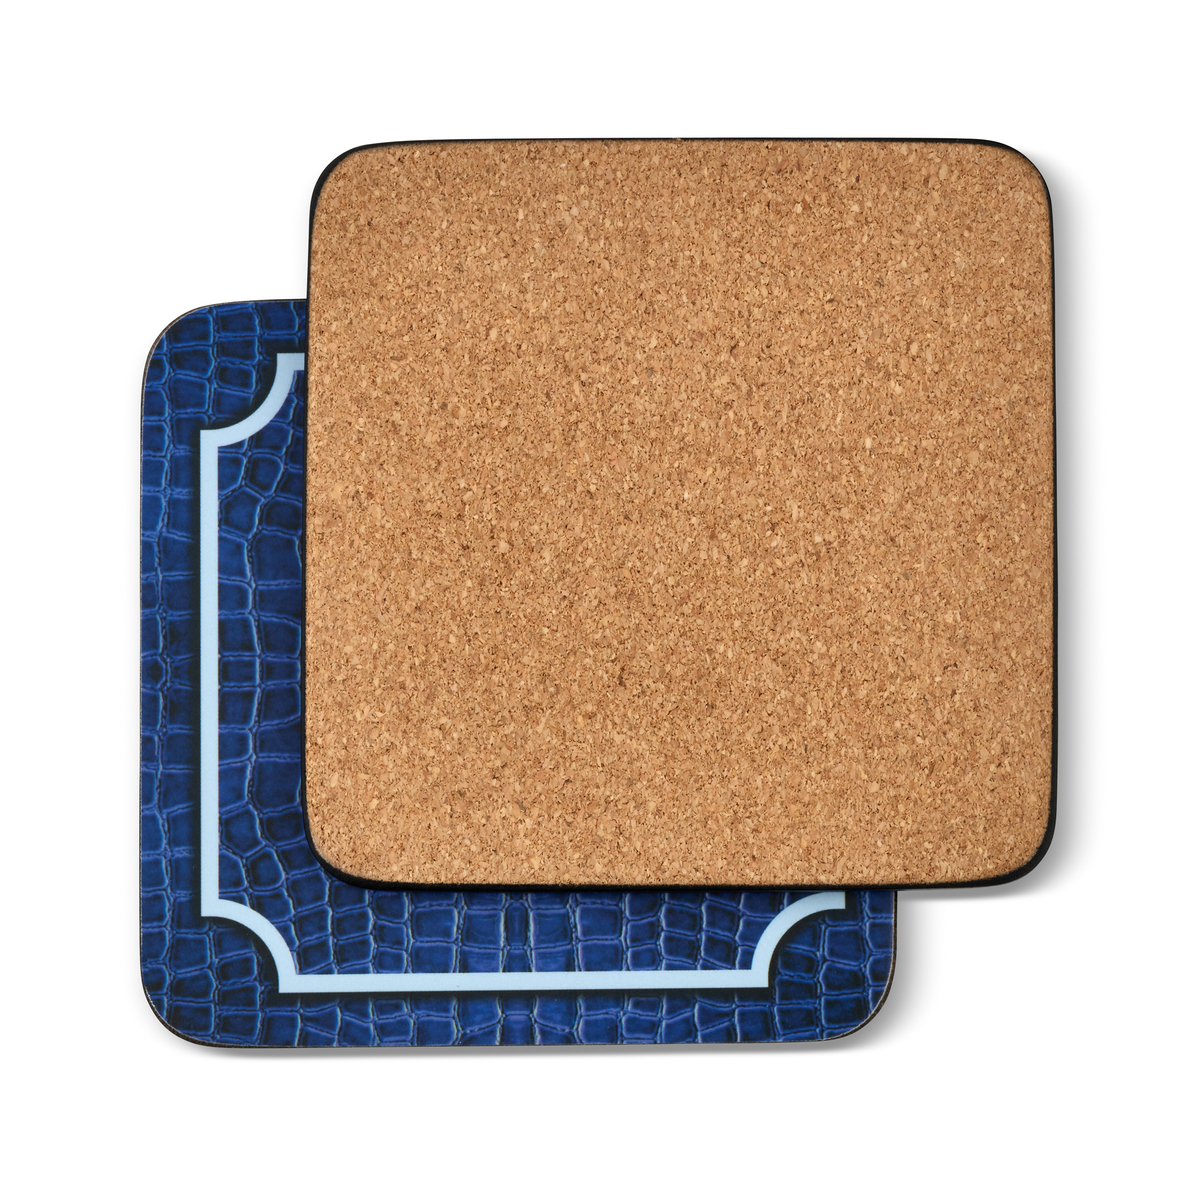 Blue Croc Leather Coaster Set of 6 image number null